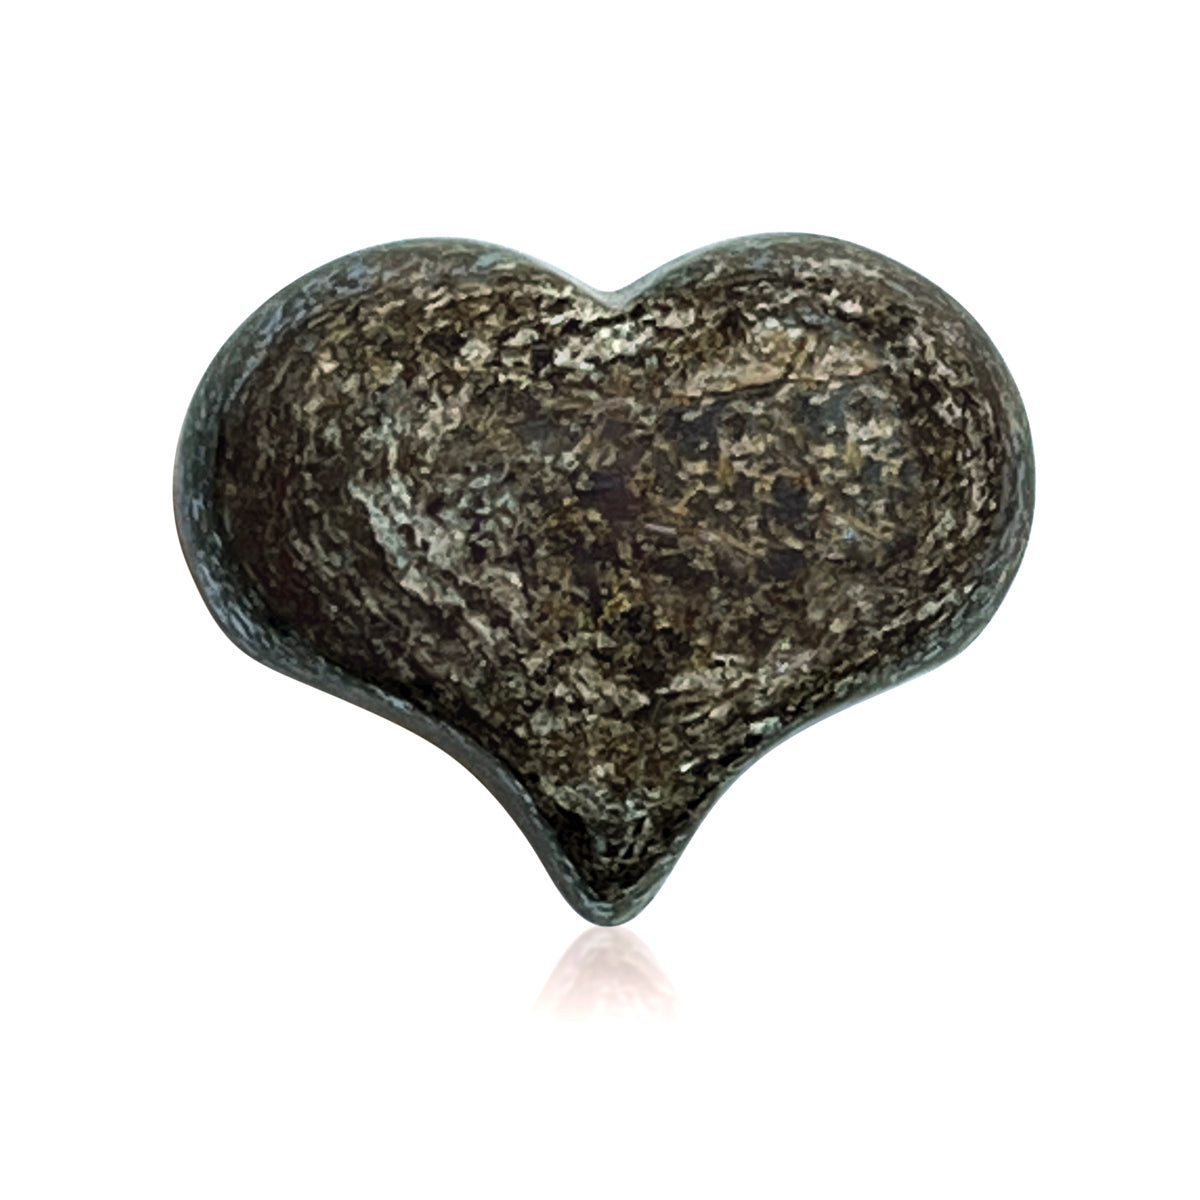 Bronzite Heart Shaped Healing Gemstone to promote Peace and Harmony